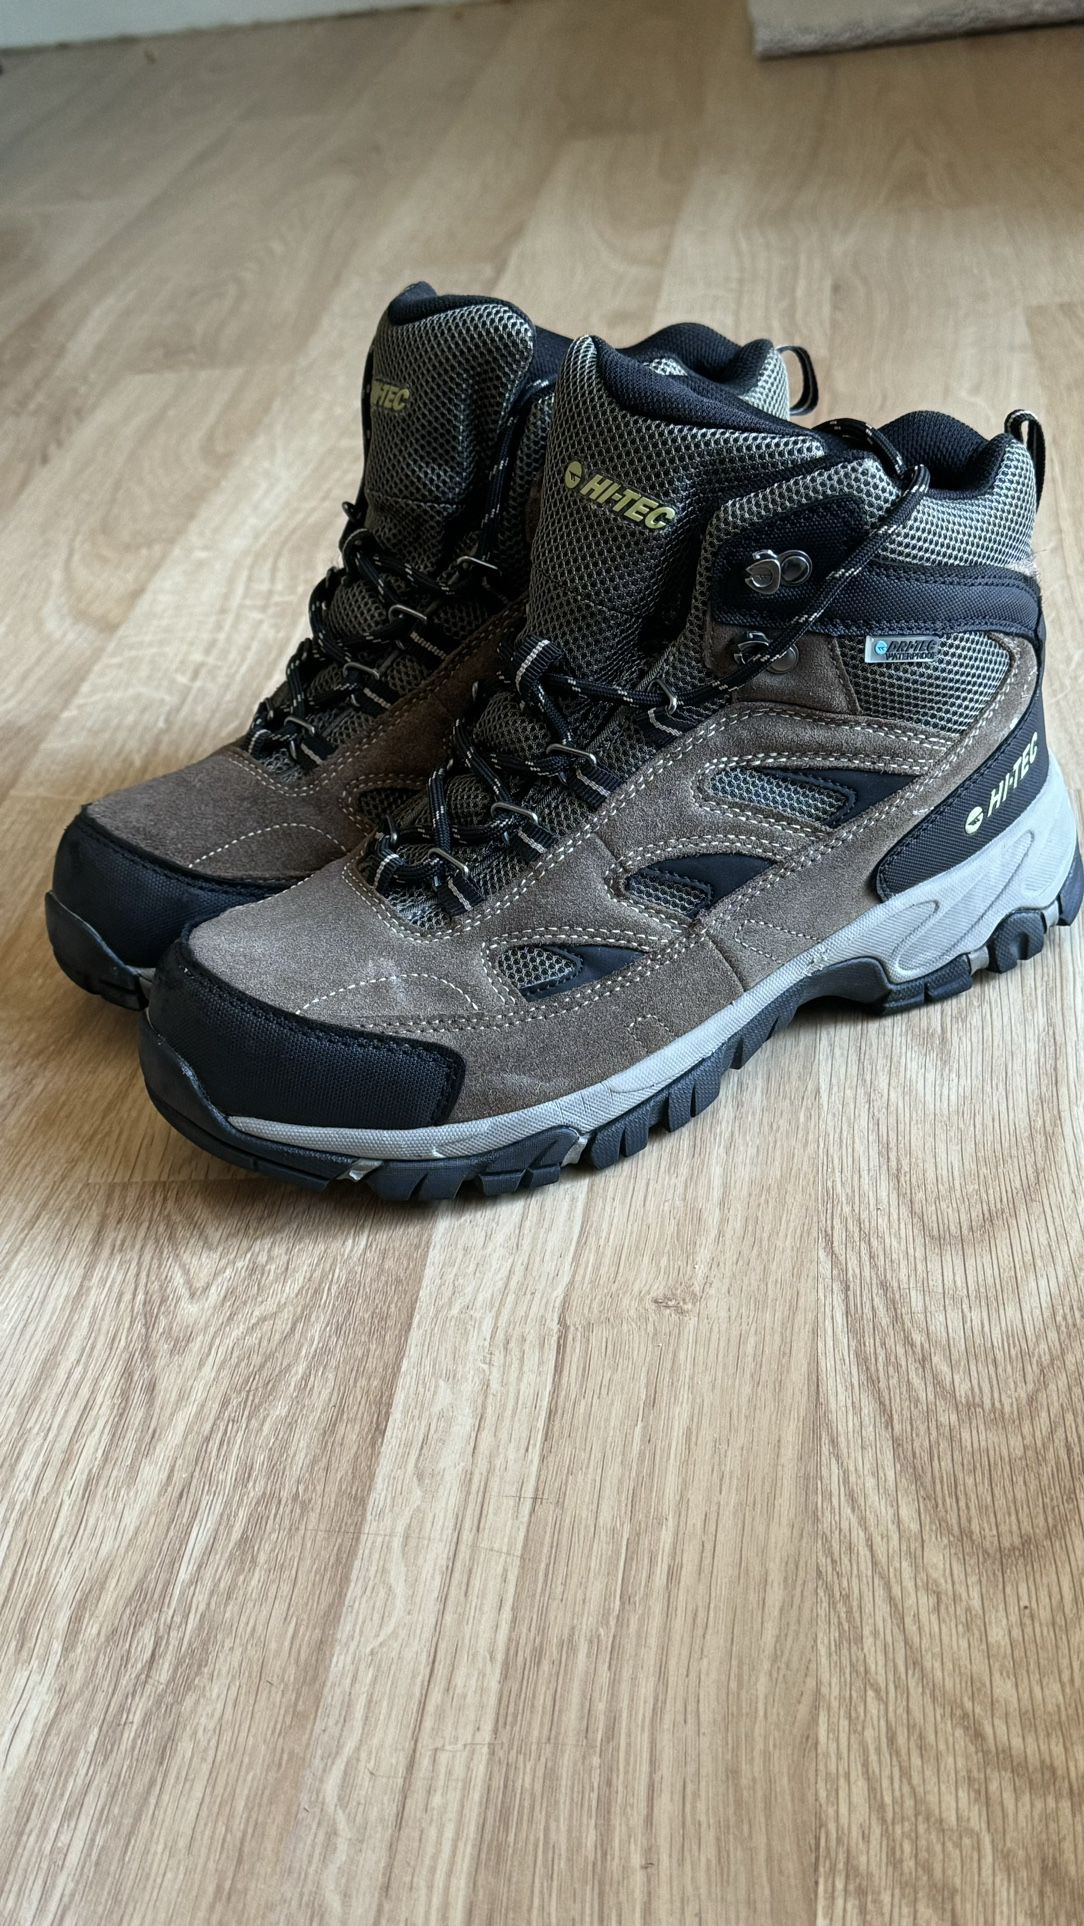 Men’s HI-TEC Yosemite WP Mid Waterproof Hiking Boots Breathable Outdoor Size 7.5